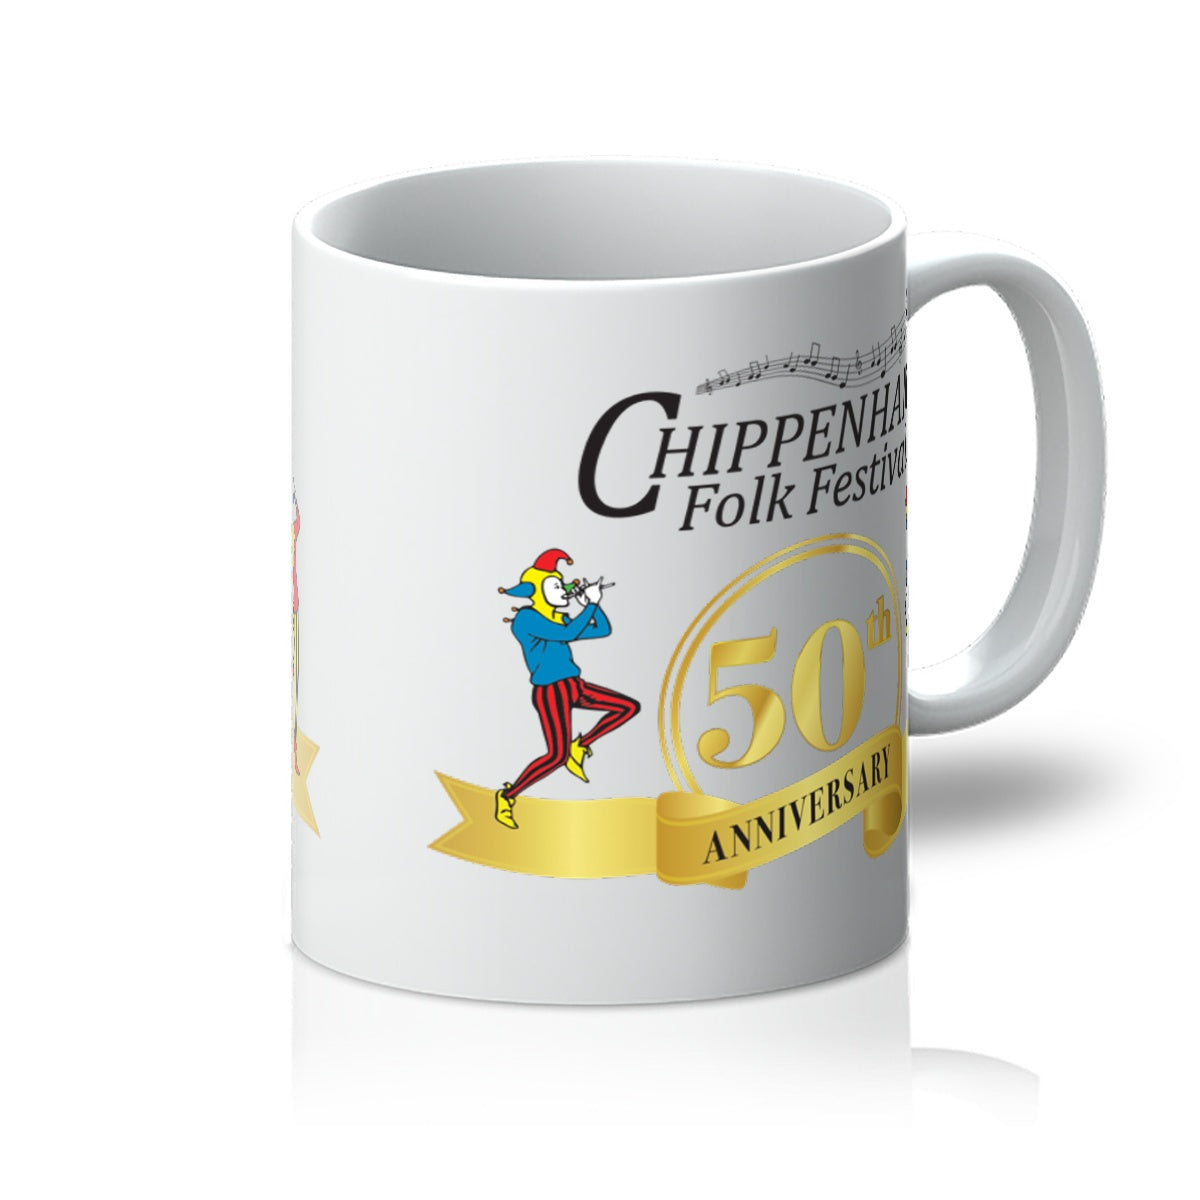 Chippenham Folk Festival 50th Anniversary Mug